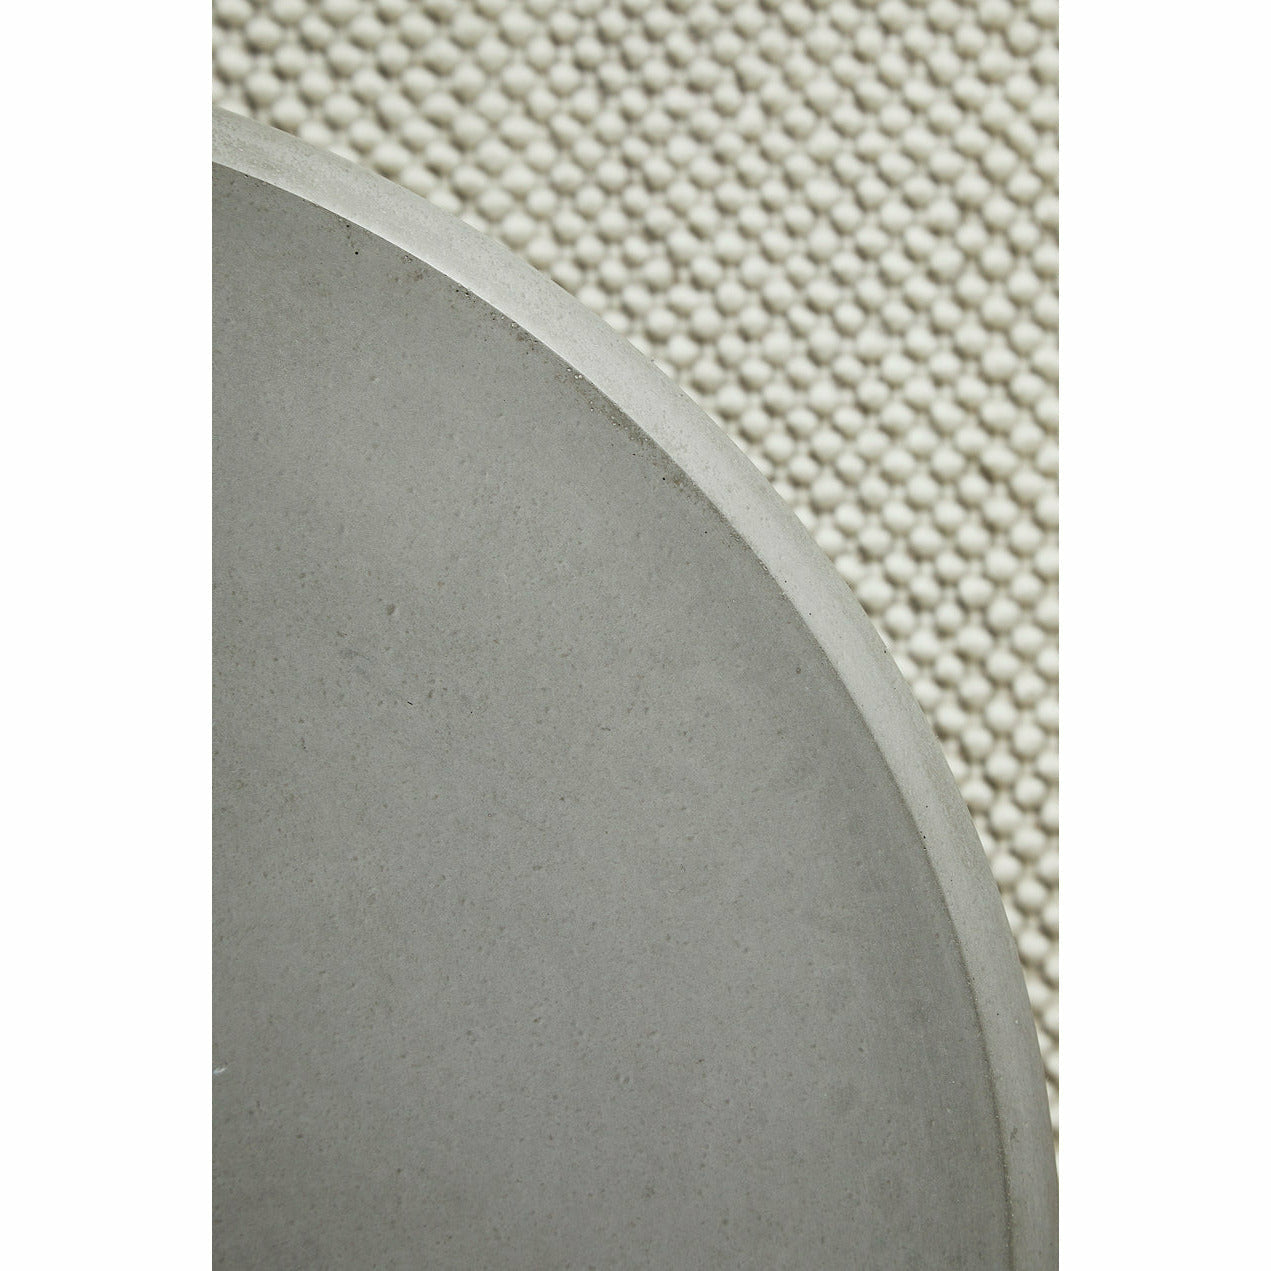 Woud - Tabela lateral sécia - concreto (Ø45xh49)